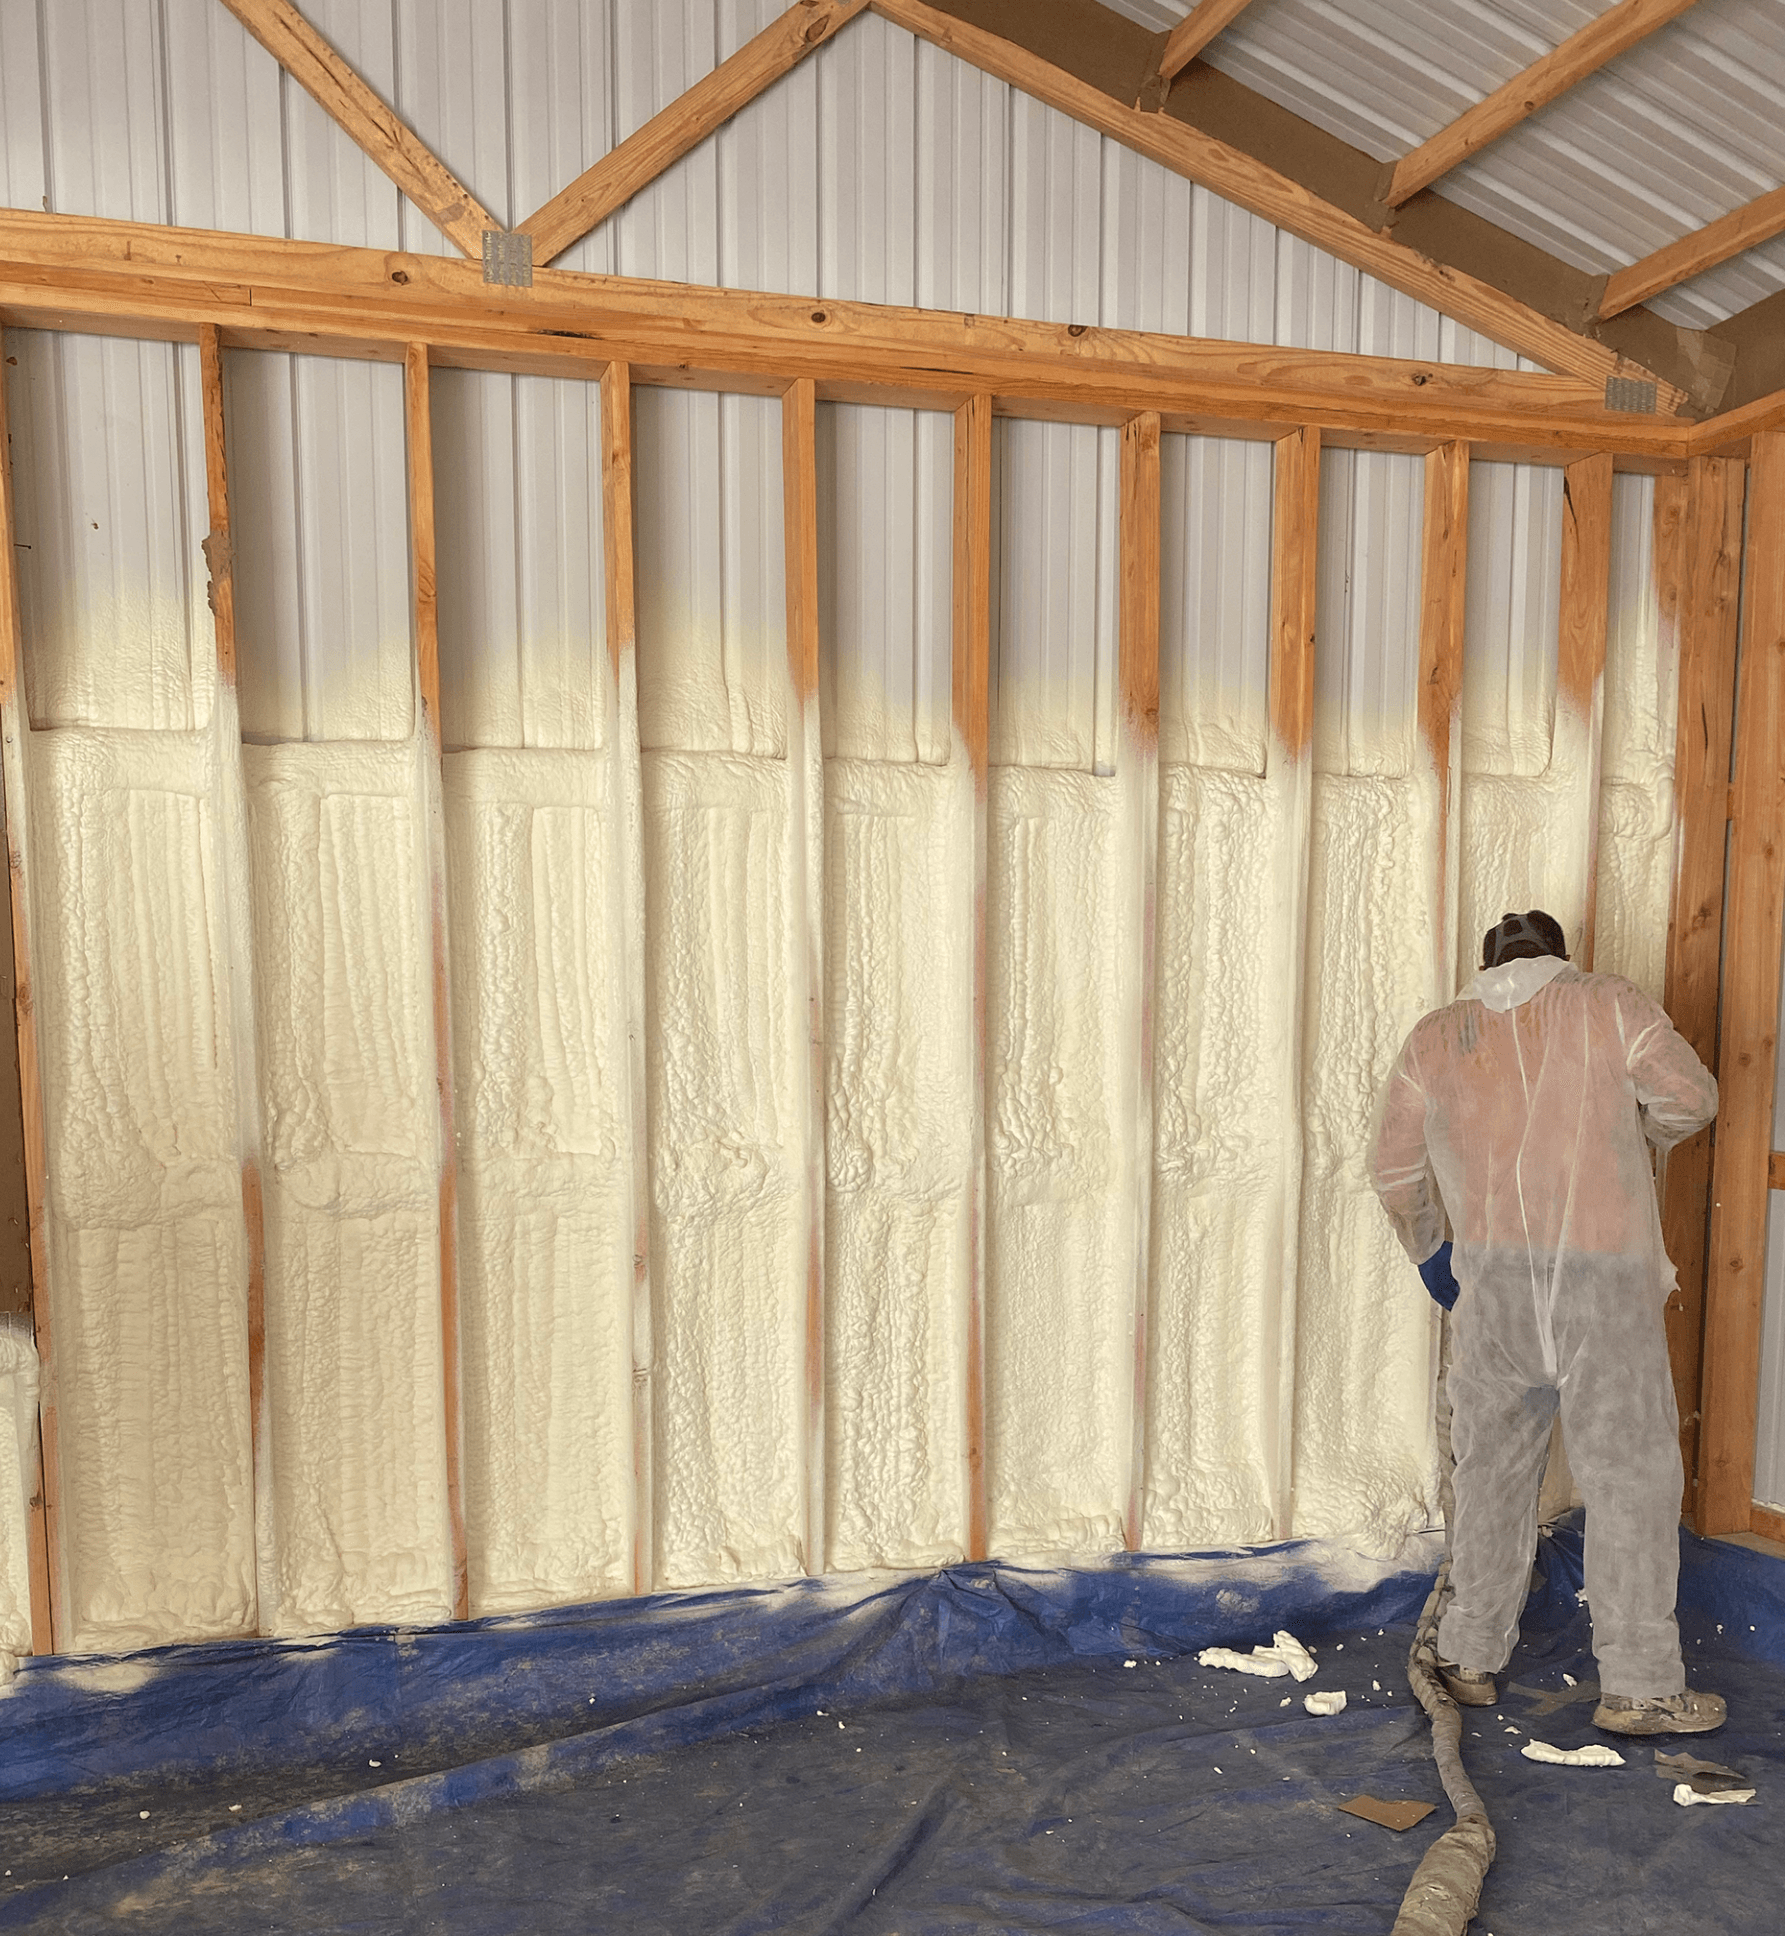 DK Spray Foam & Insulation Contractors Install Spray Foam Insulation in Walls in Moberly, MO.